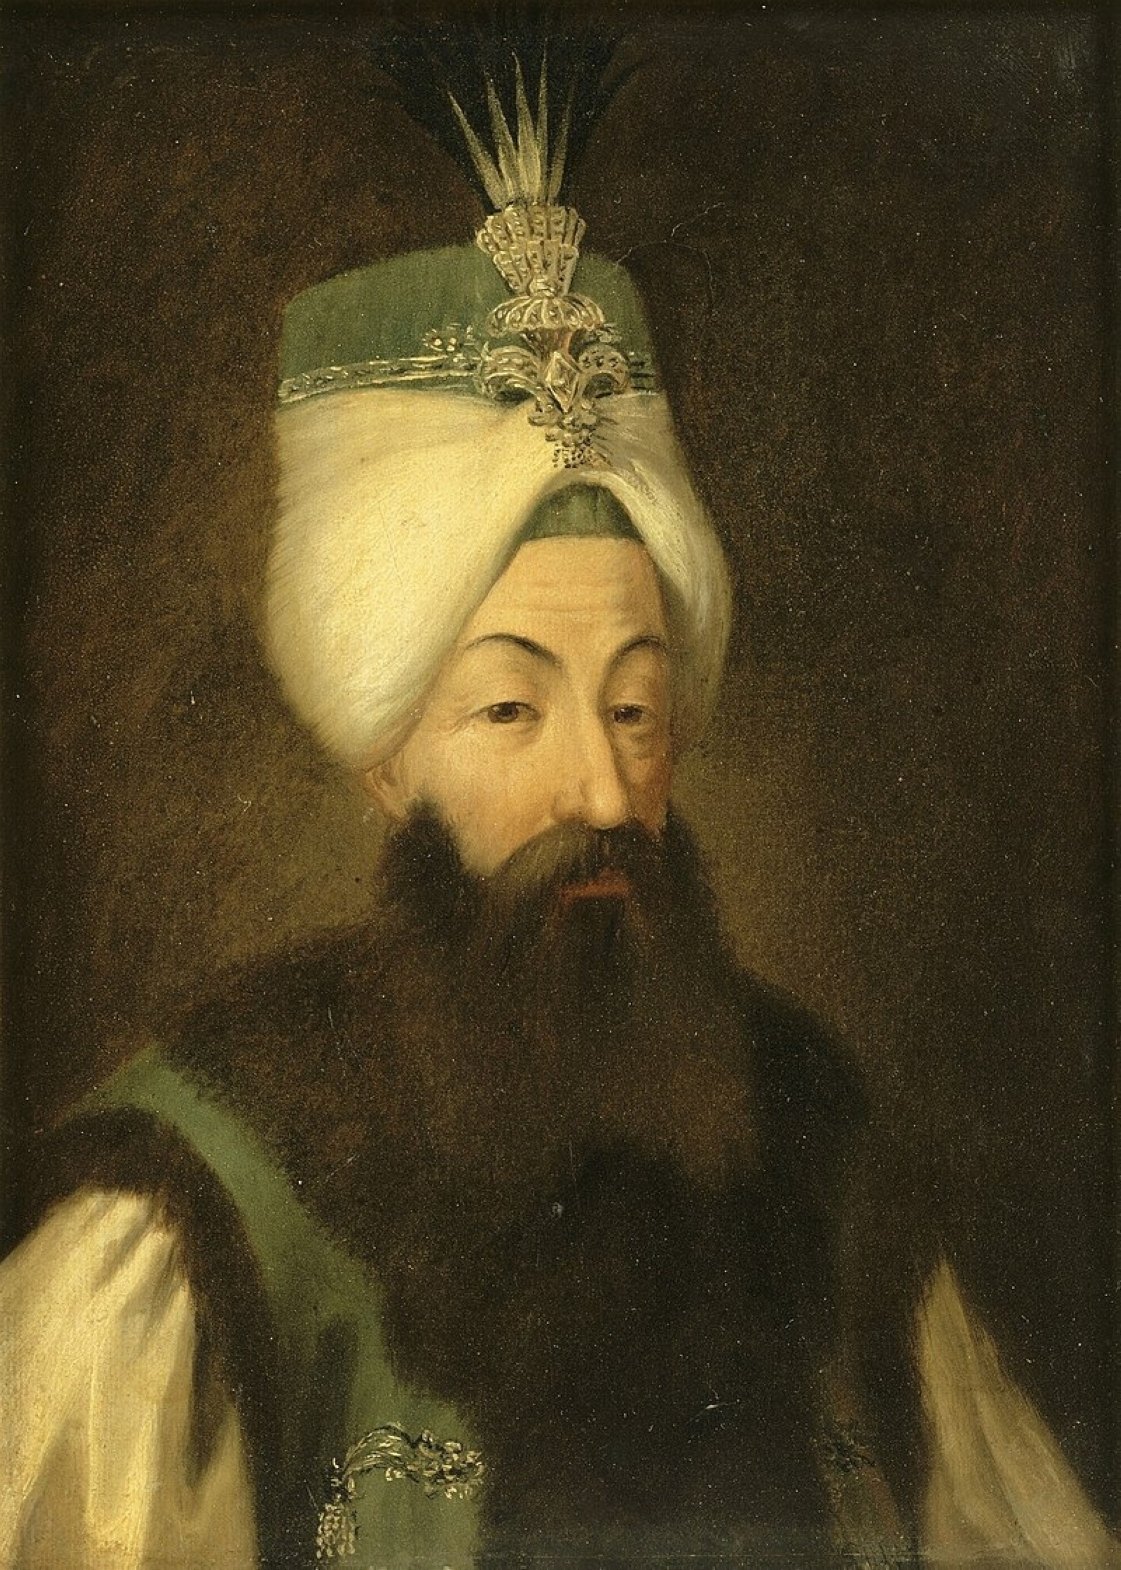 A portrait of Sultan Abdülhamid I.